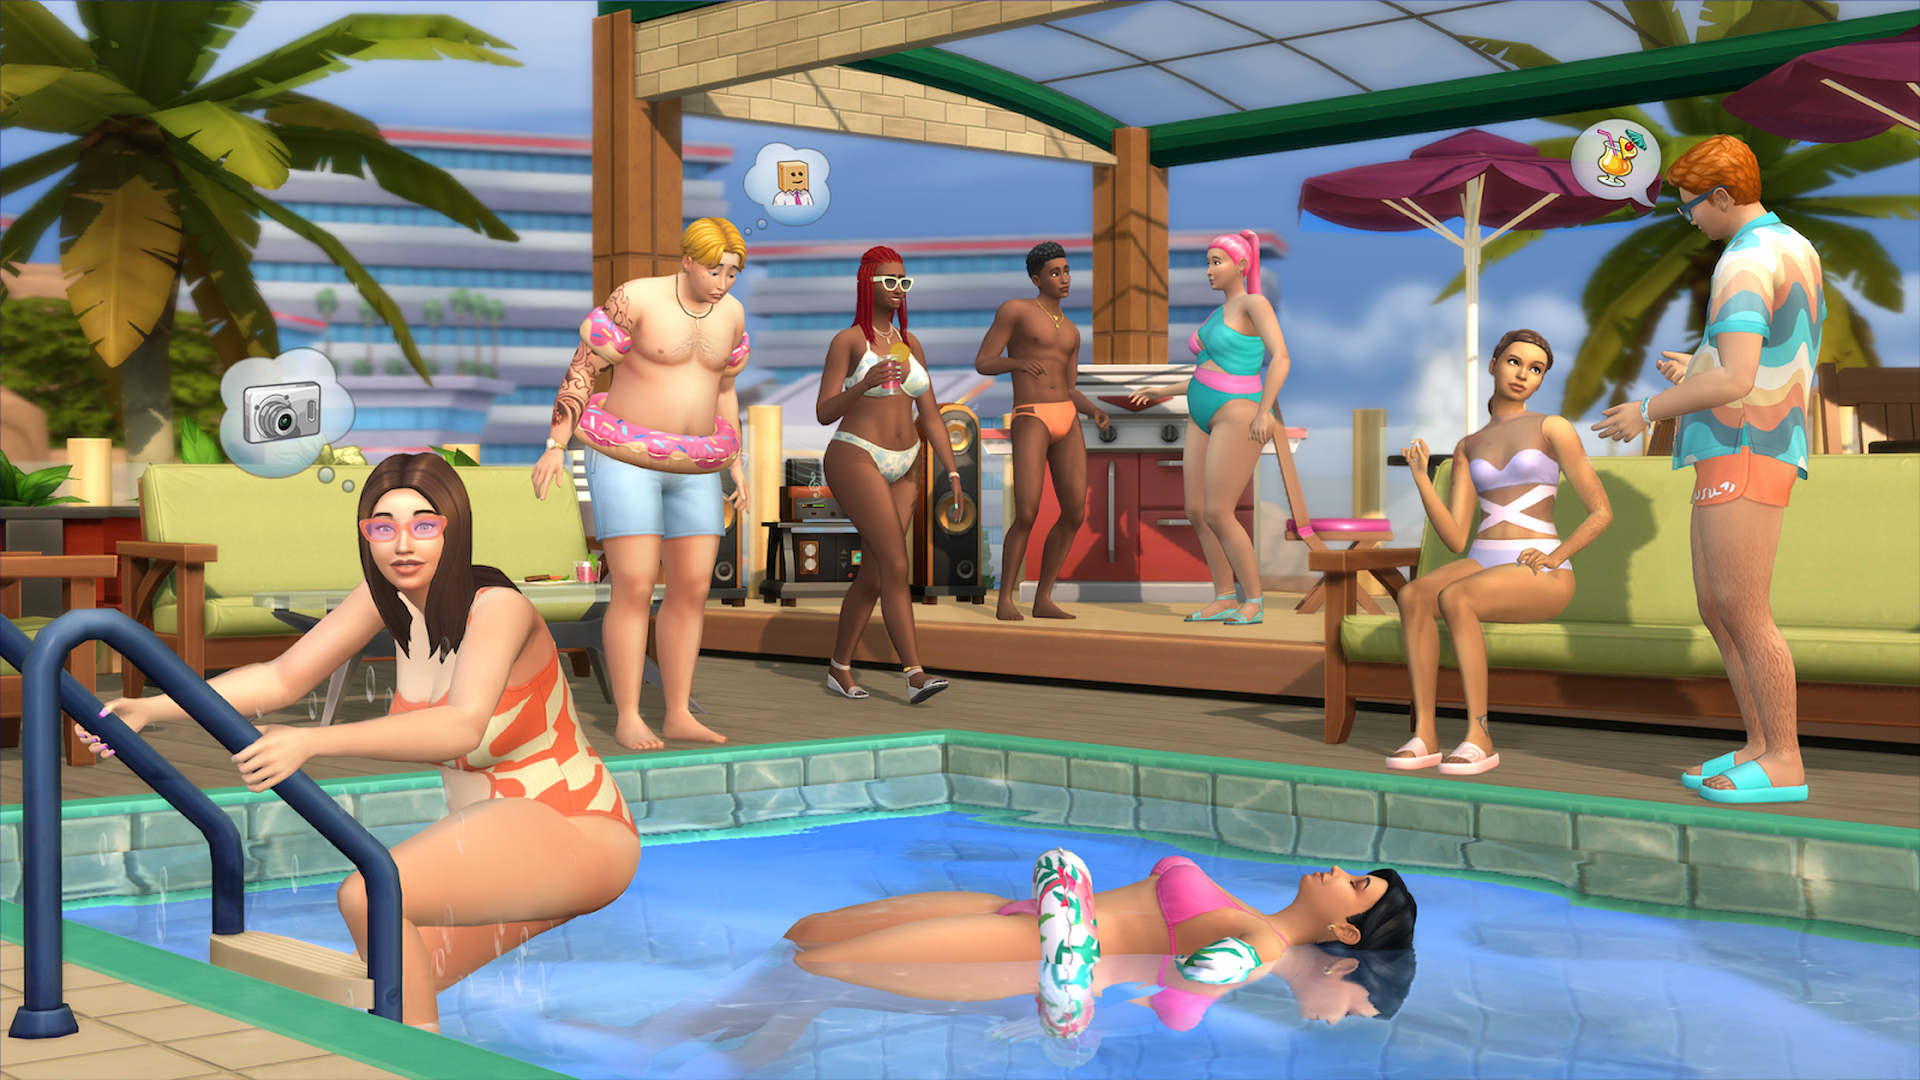 Die Sims 4 Poolside Splash-Kit-Szene zeigt Sims, die sich am Pool amüsieren